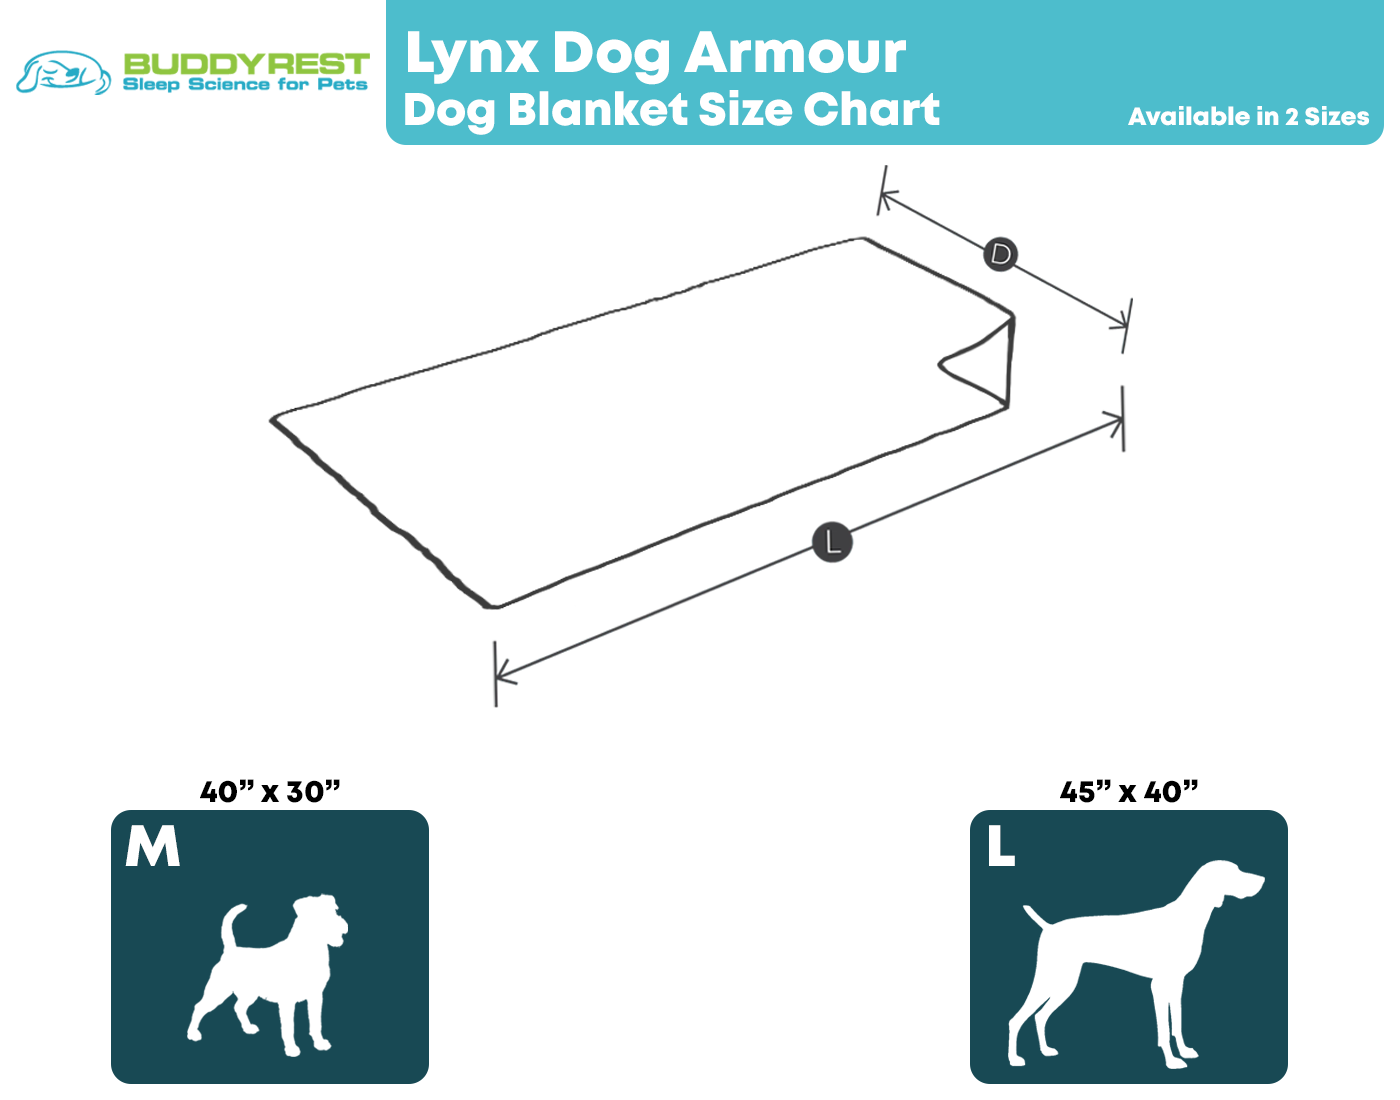 Lynx Dog Armour Blanket Size Chart